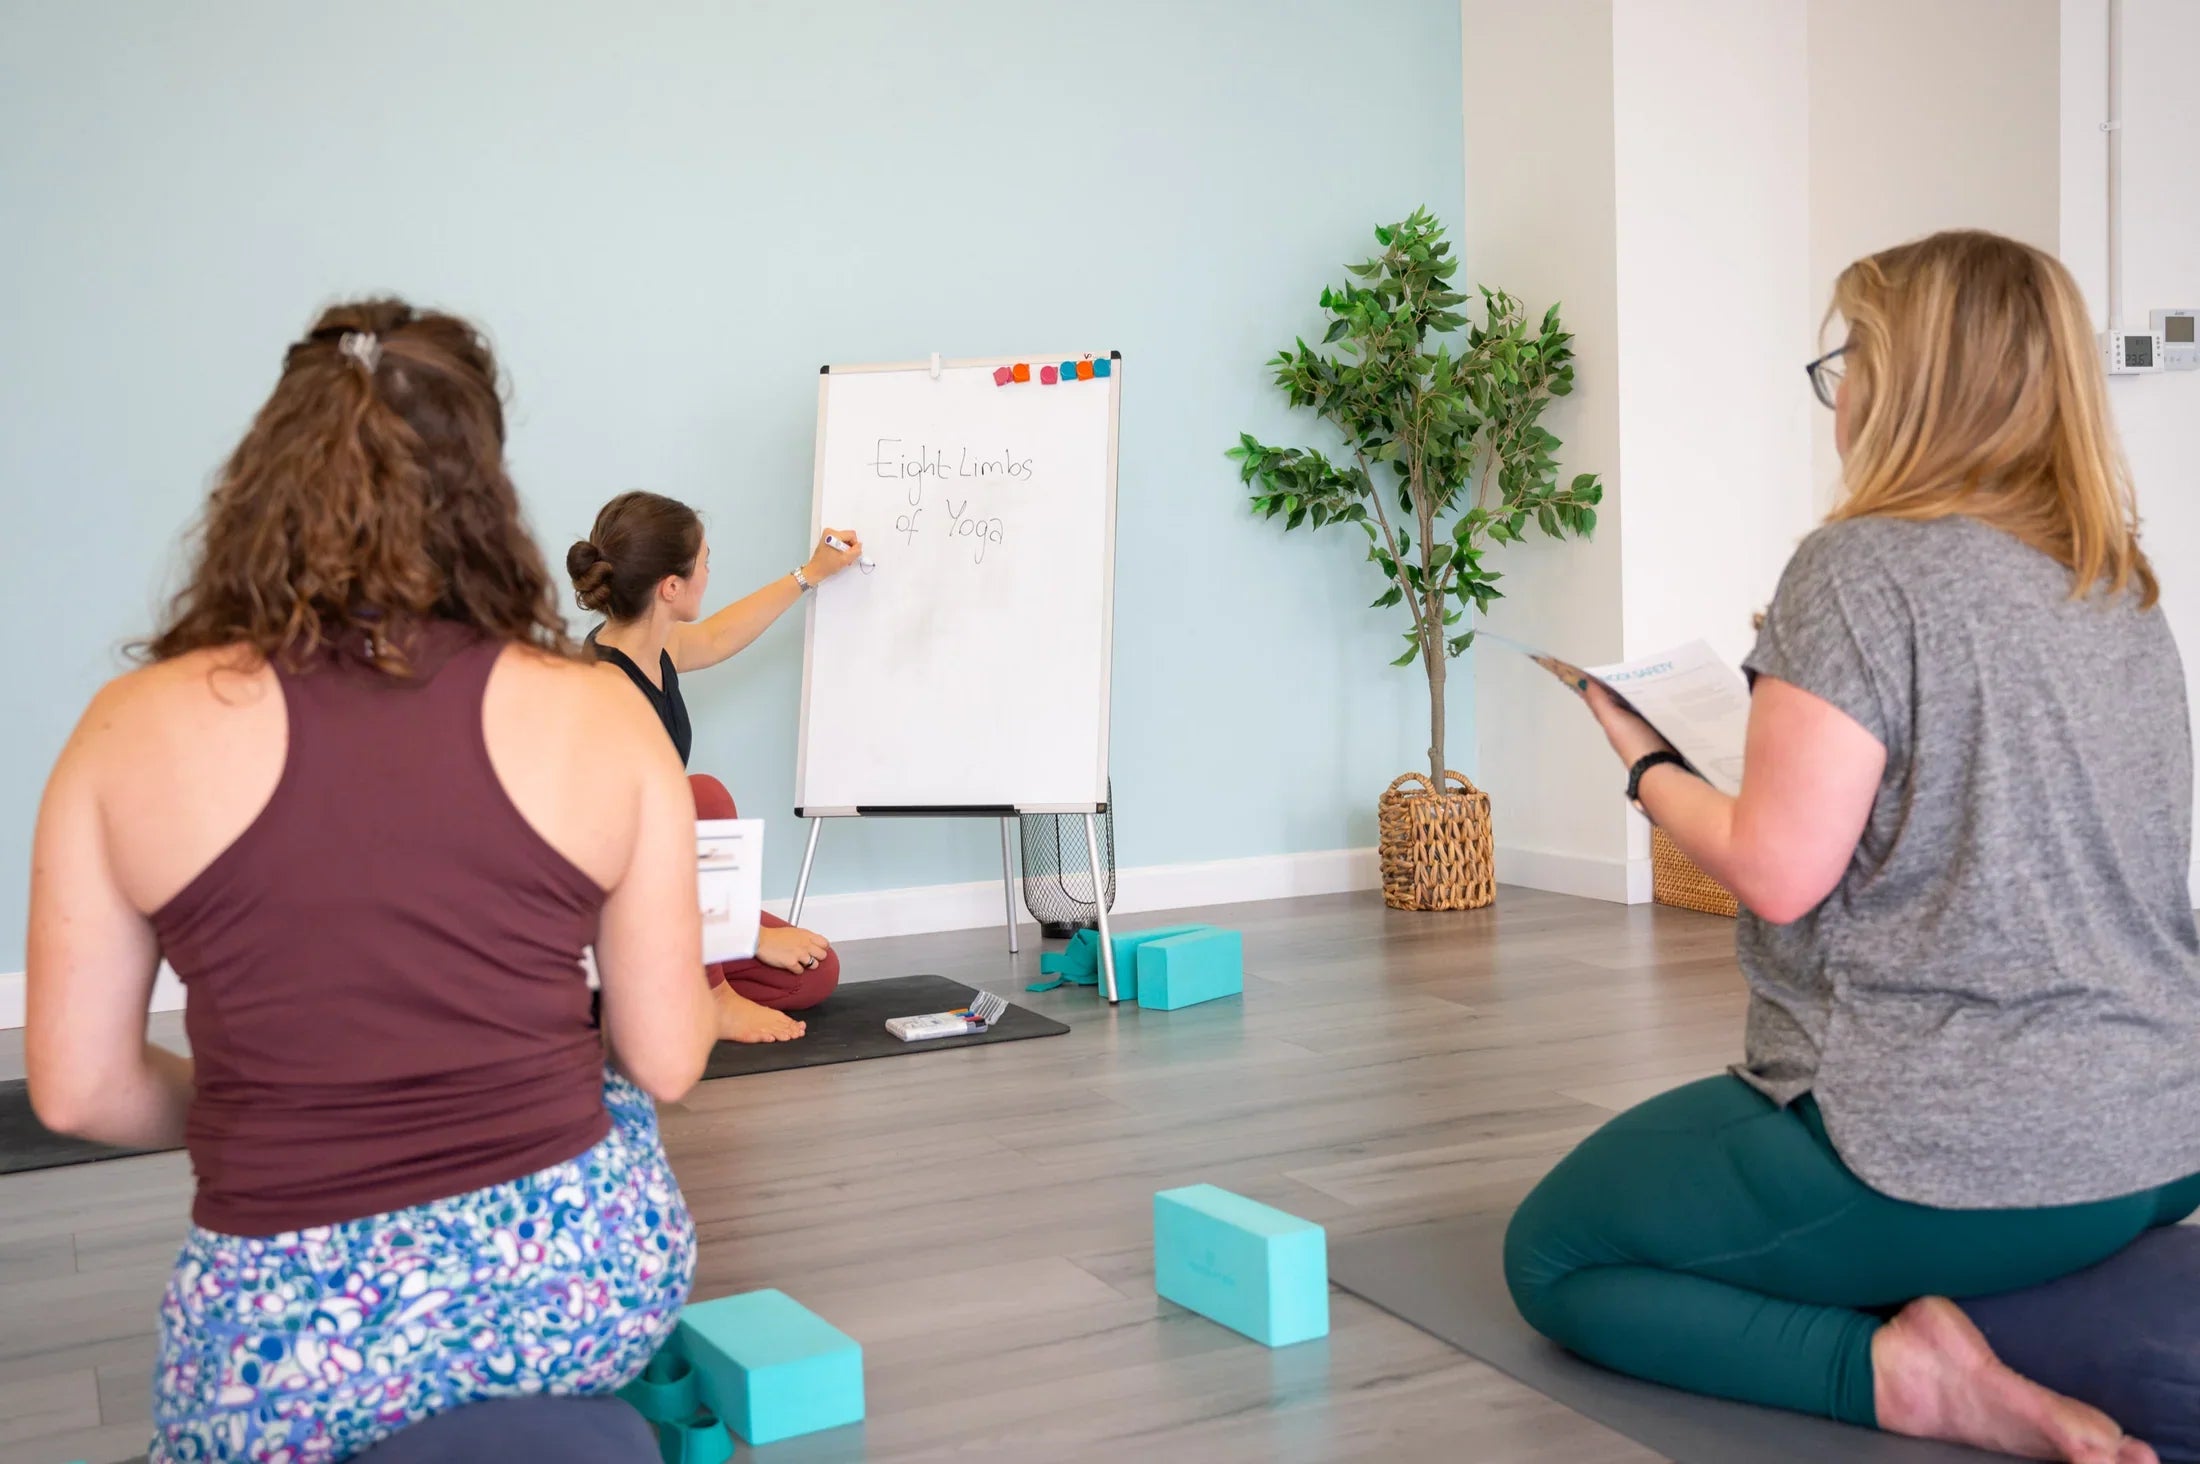 *FULL* Yoga Teacher Training - 10 Month Course - Burton (February 2024)